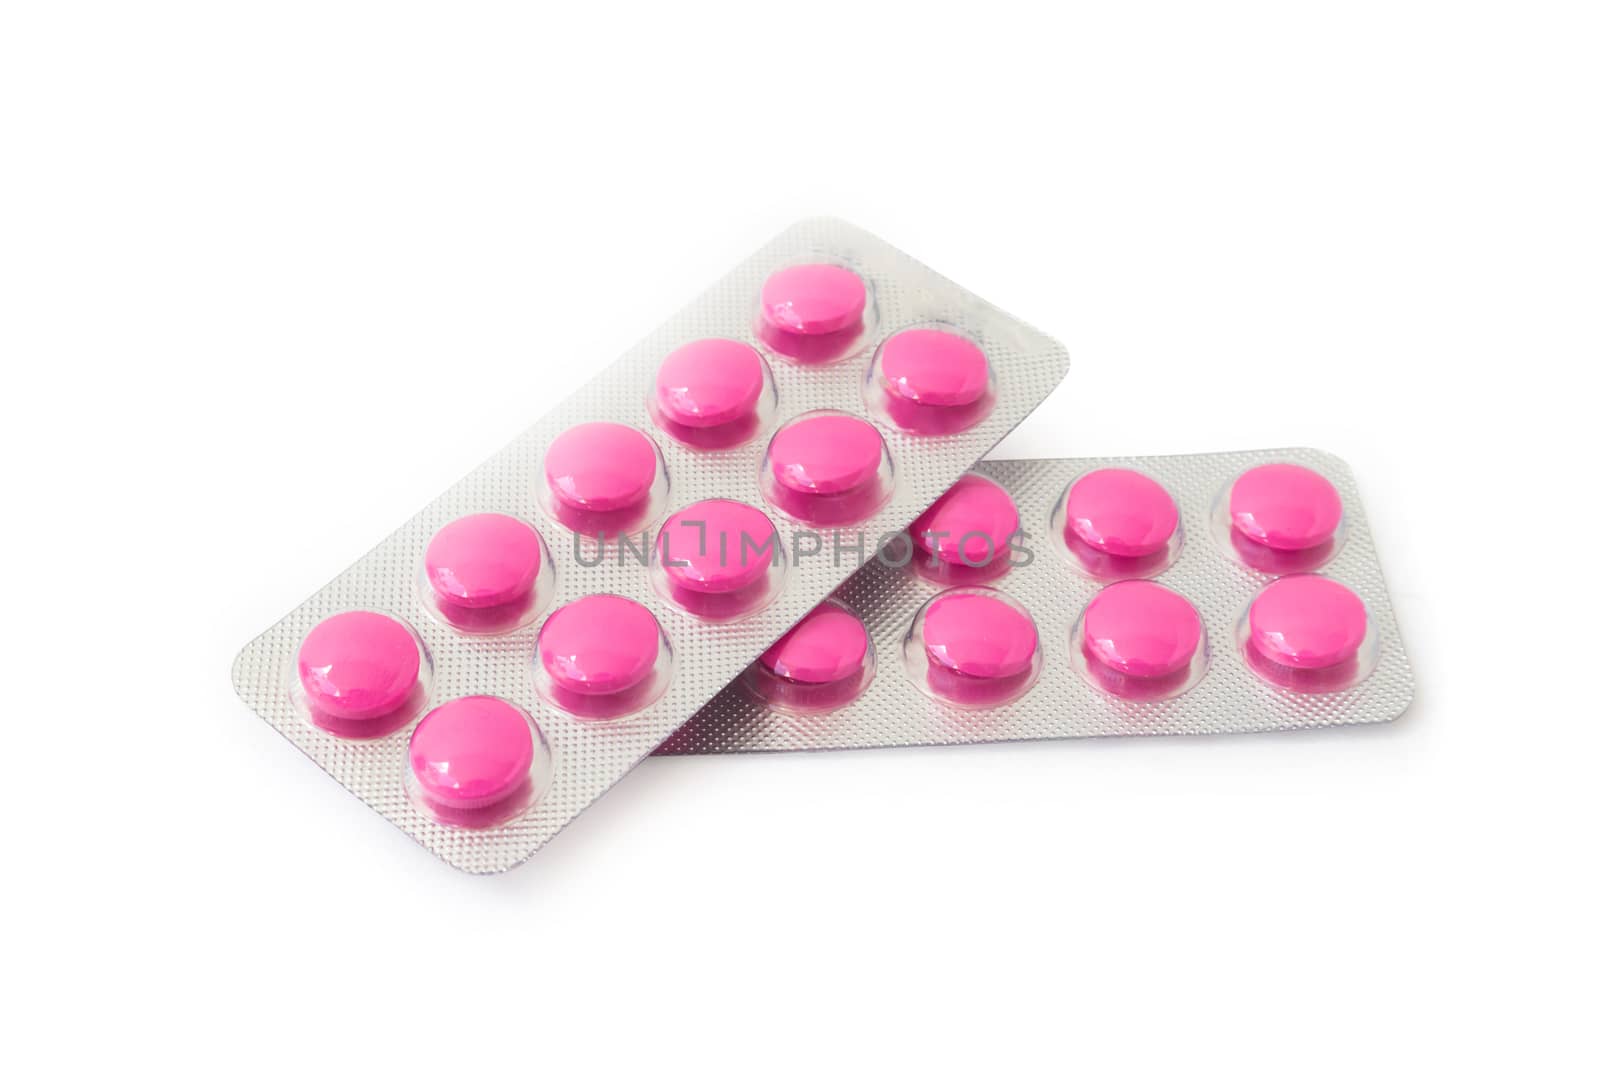 Pink pills in blister pack on white background by pt.pongsak@gmail.com